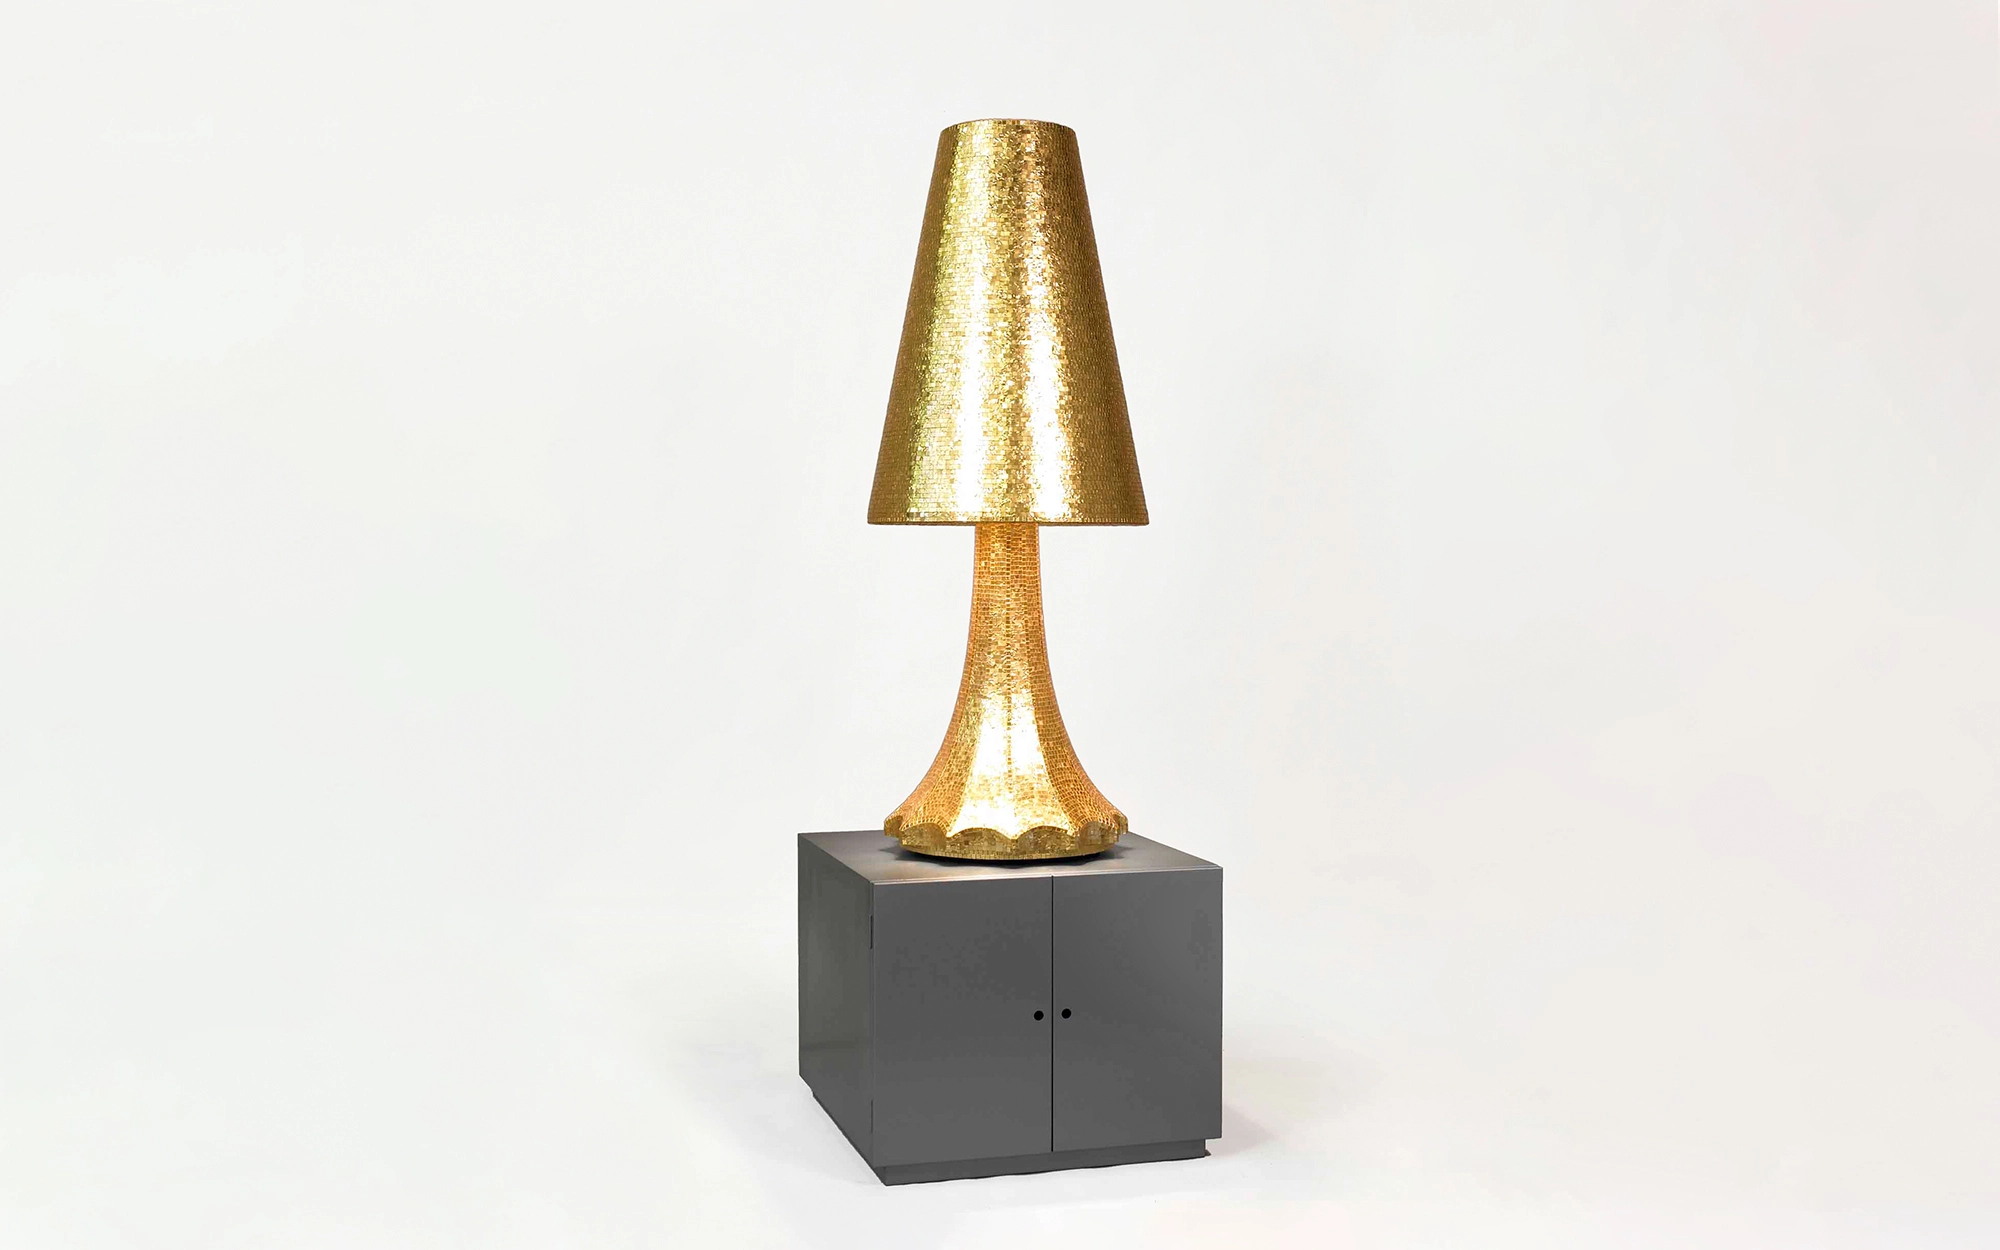 Lampada yellow gold - Alessandro Mendini - Console - Galerie kreo